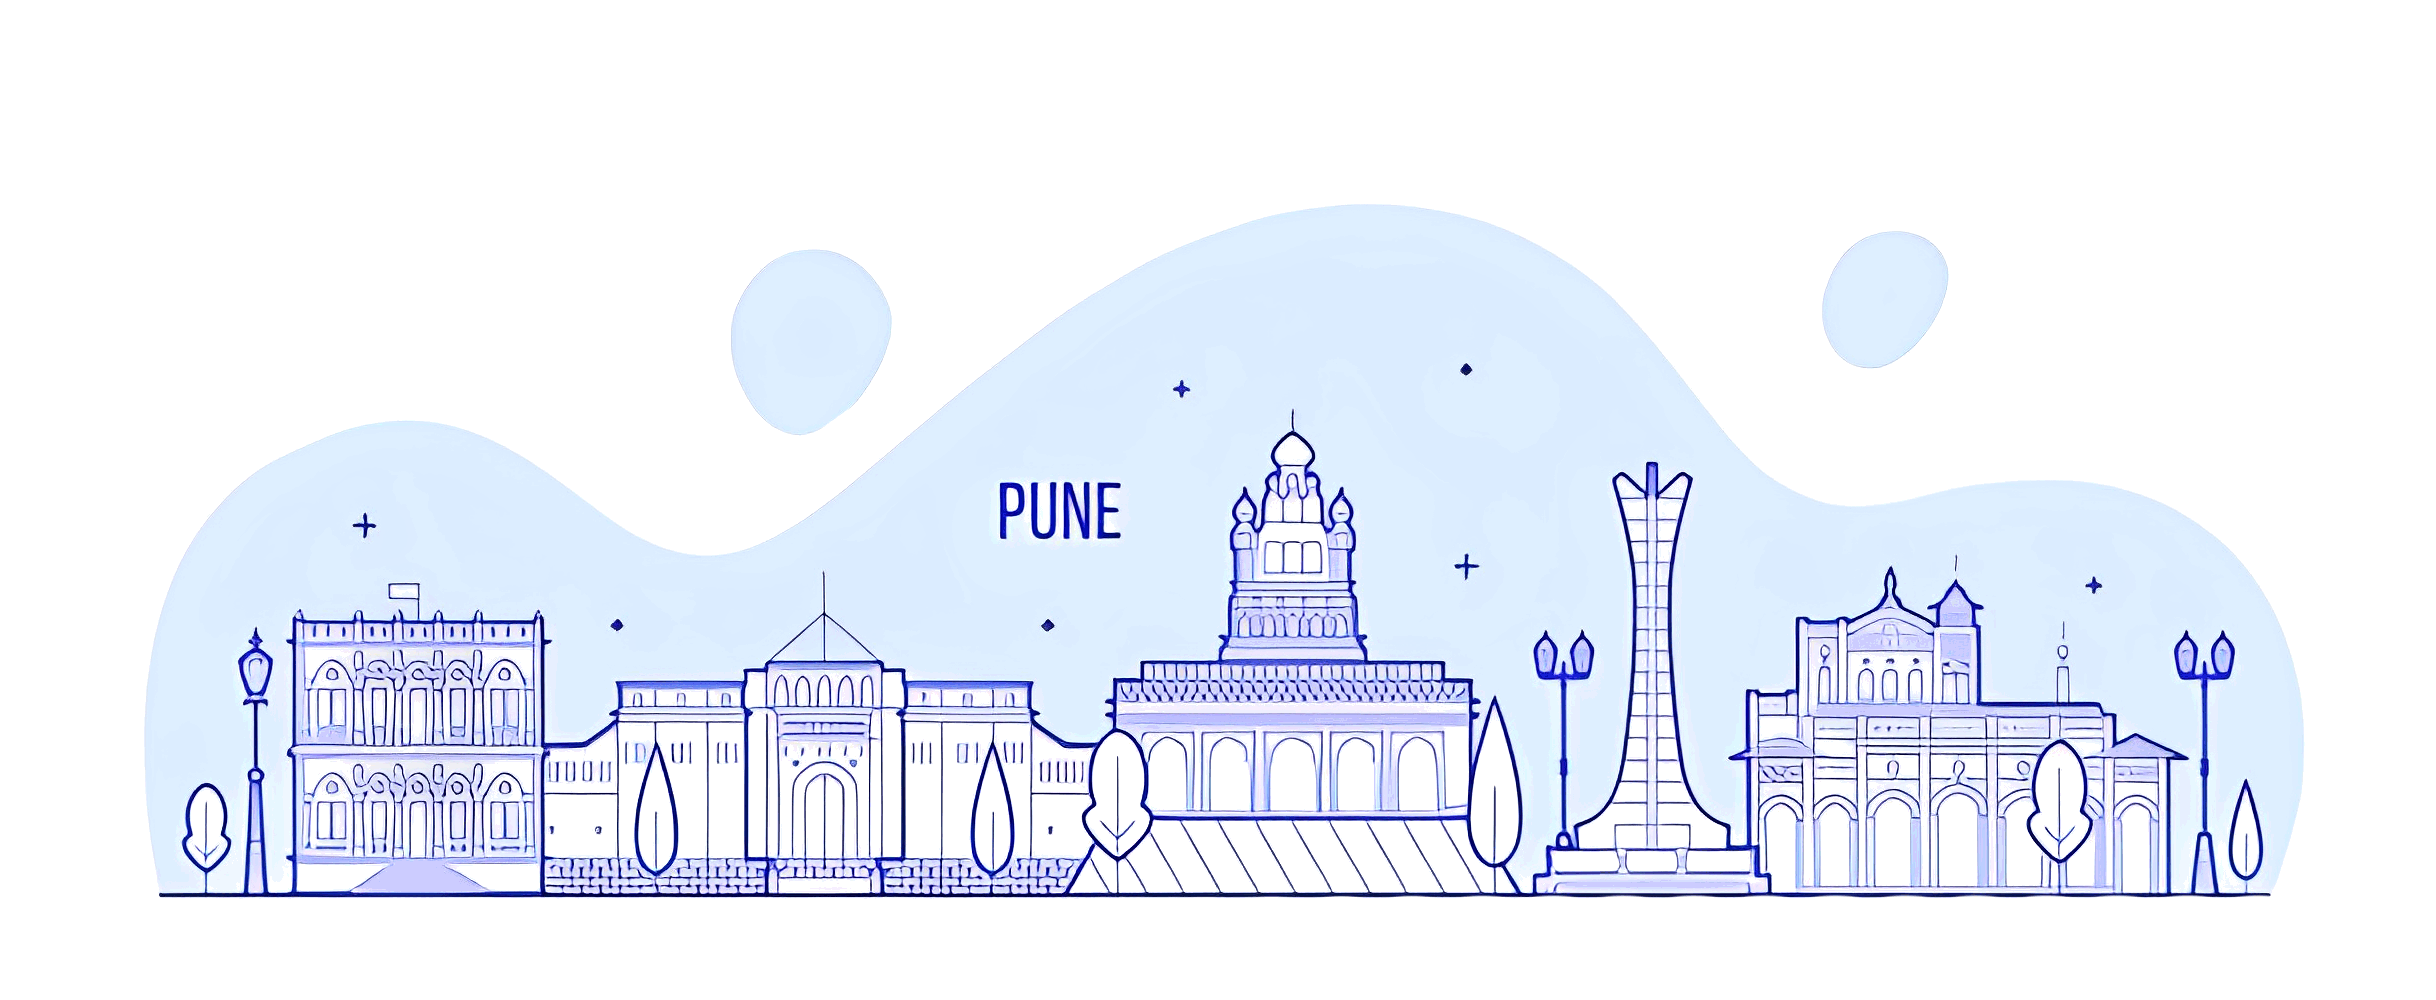 Pune Image